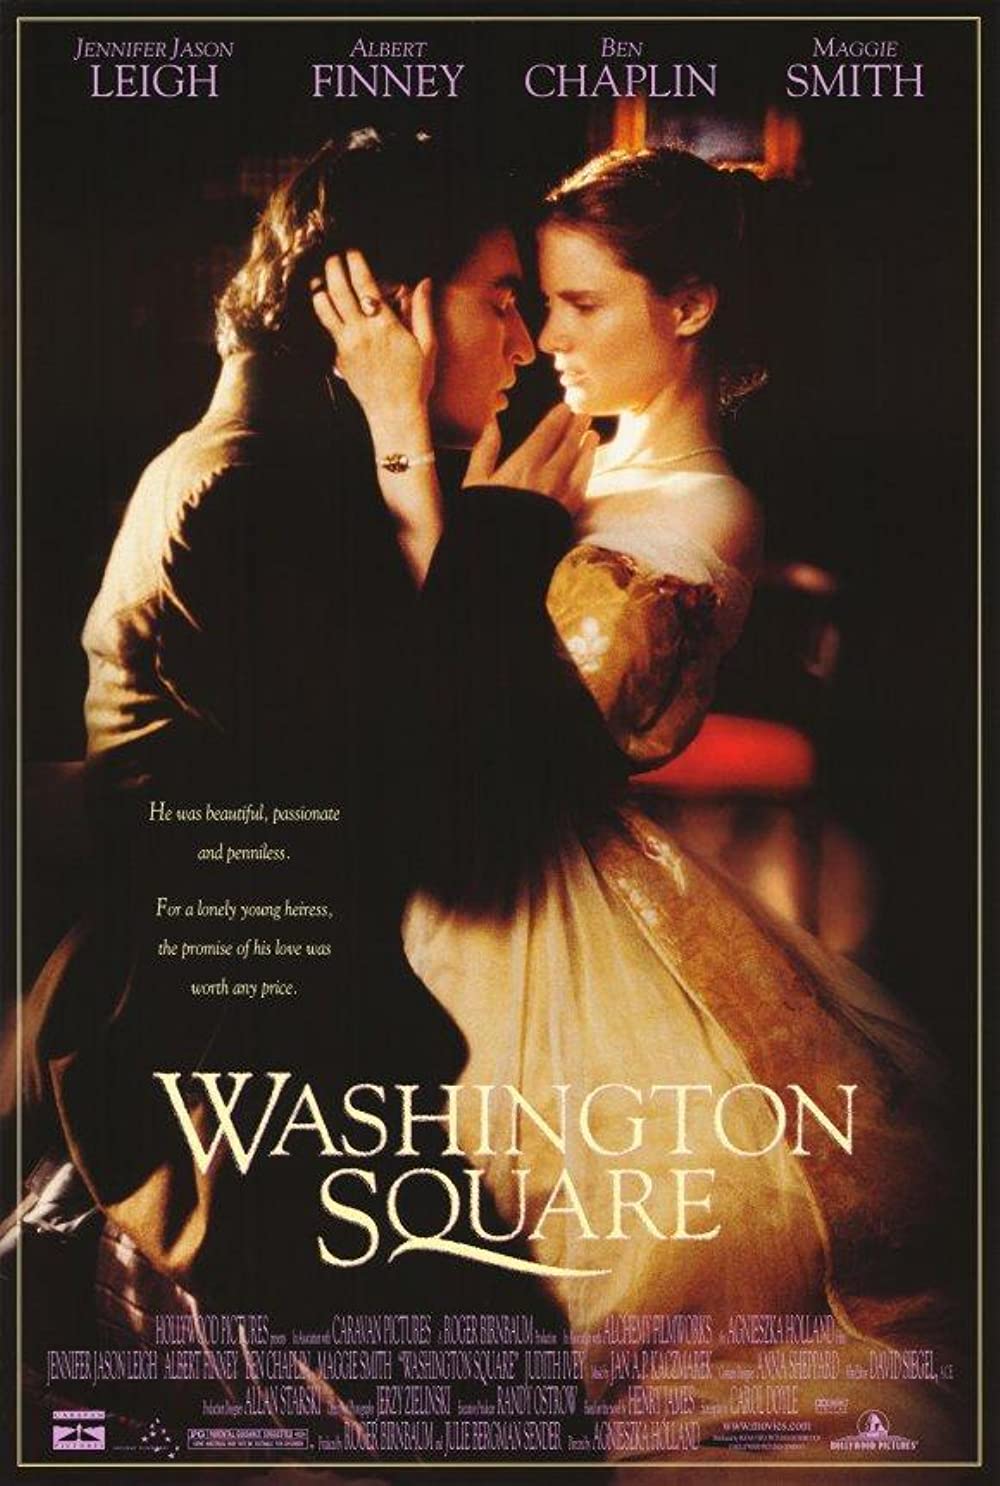 Filmbeschreibung zu Washington Square